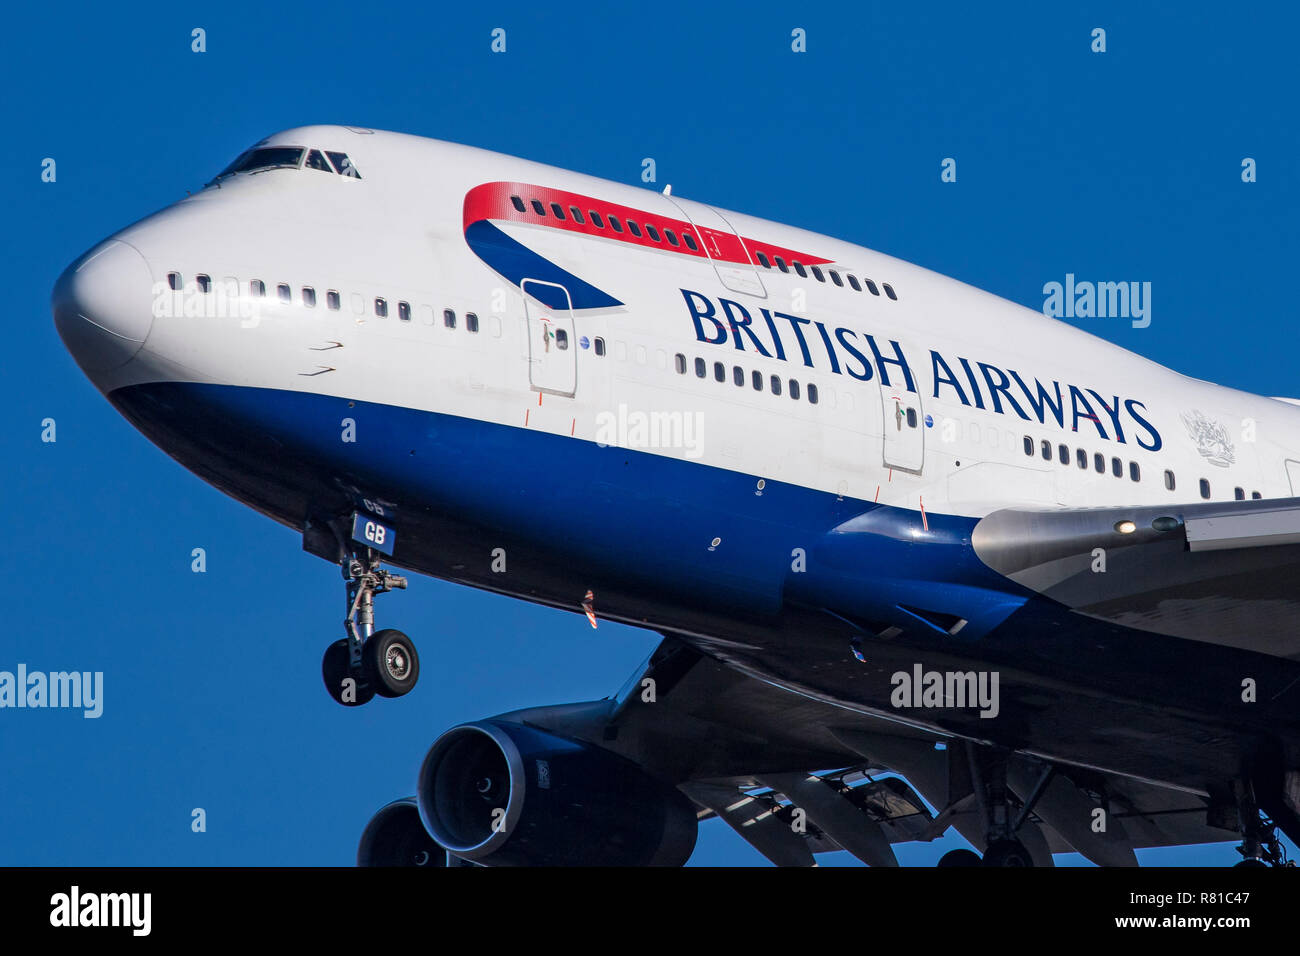 British Airways Boeing 747 Jumbo Jet seen landing at the London ...